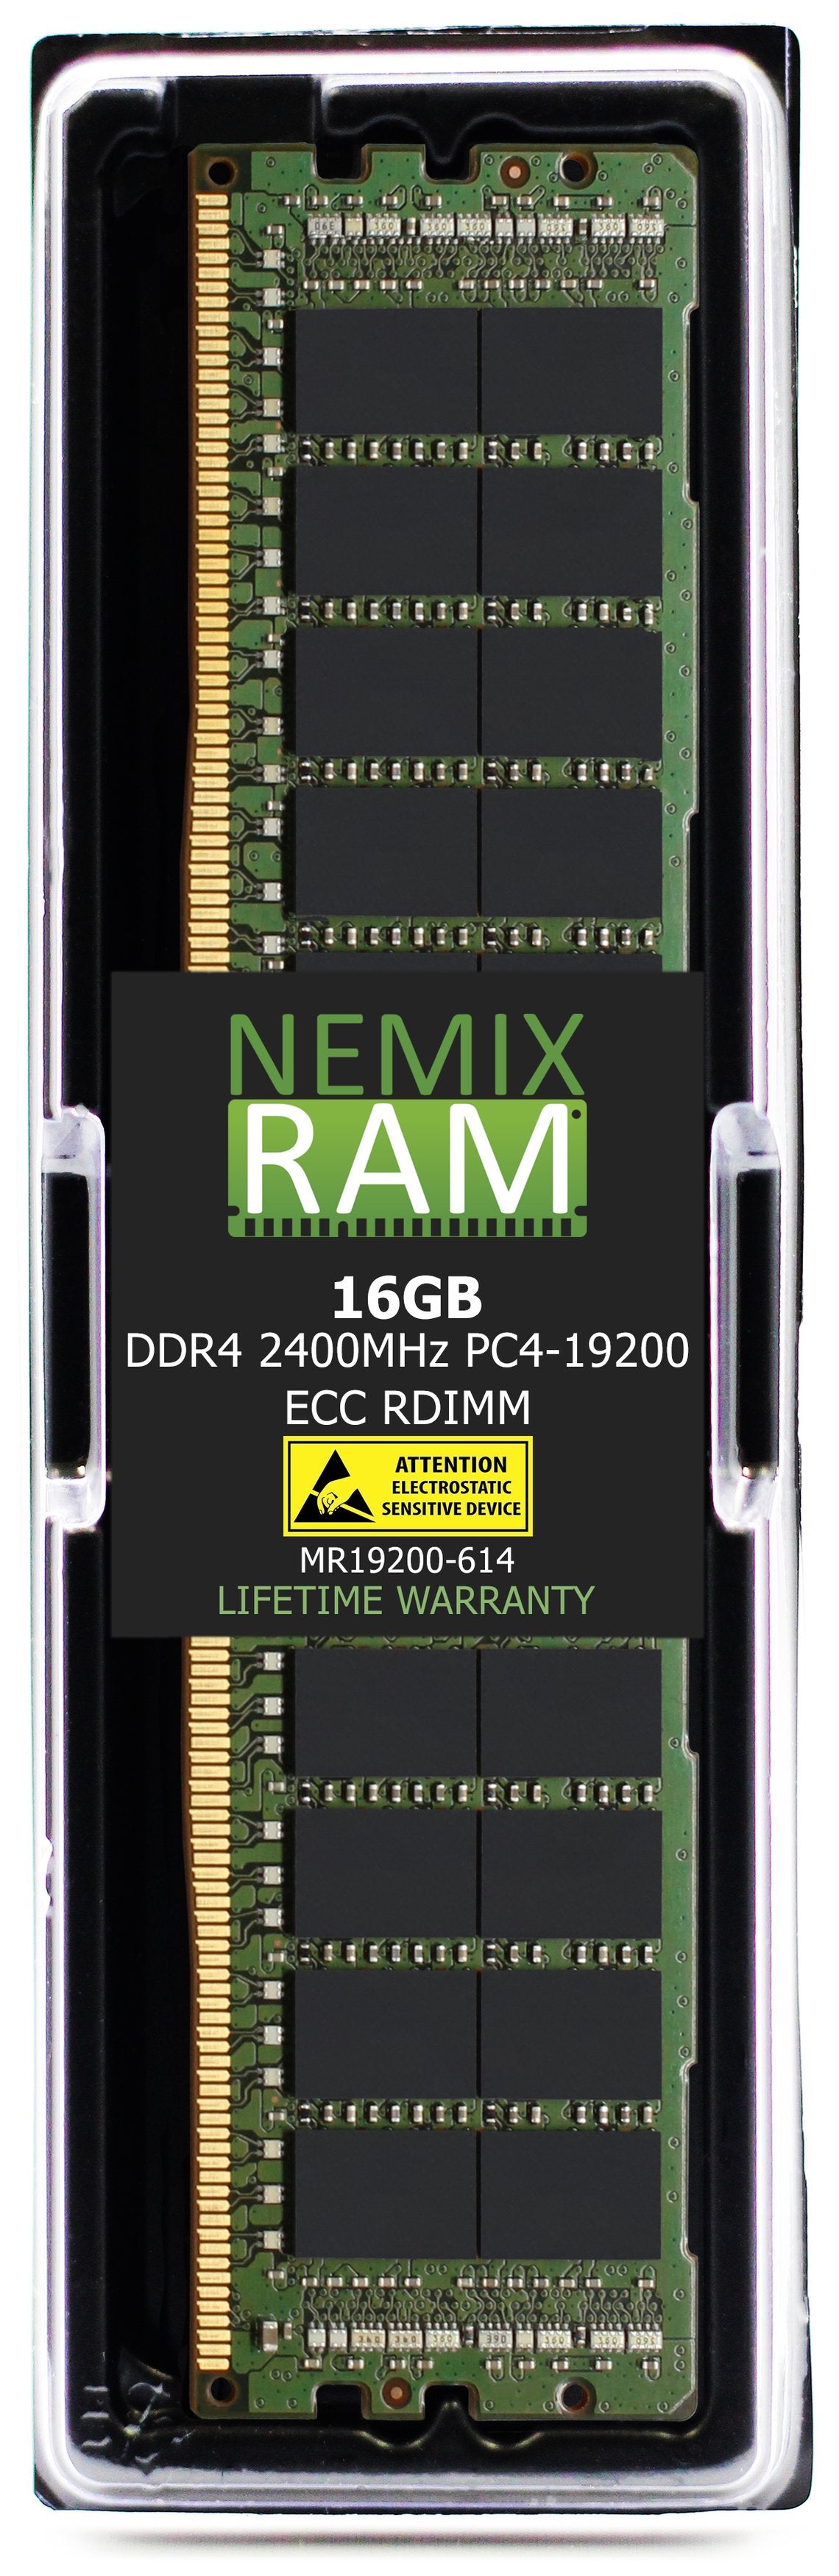 Hynix MT82GR7AFR4N-UH 16G DDR4 2400MHZ PC4-19200 RDIMM Compatible Memory Module